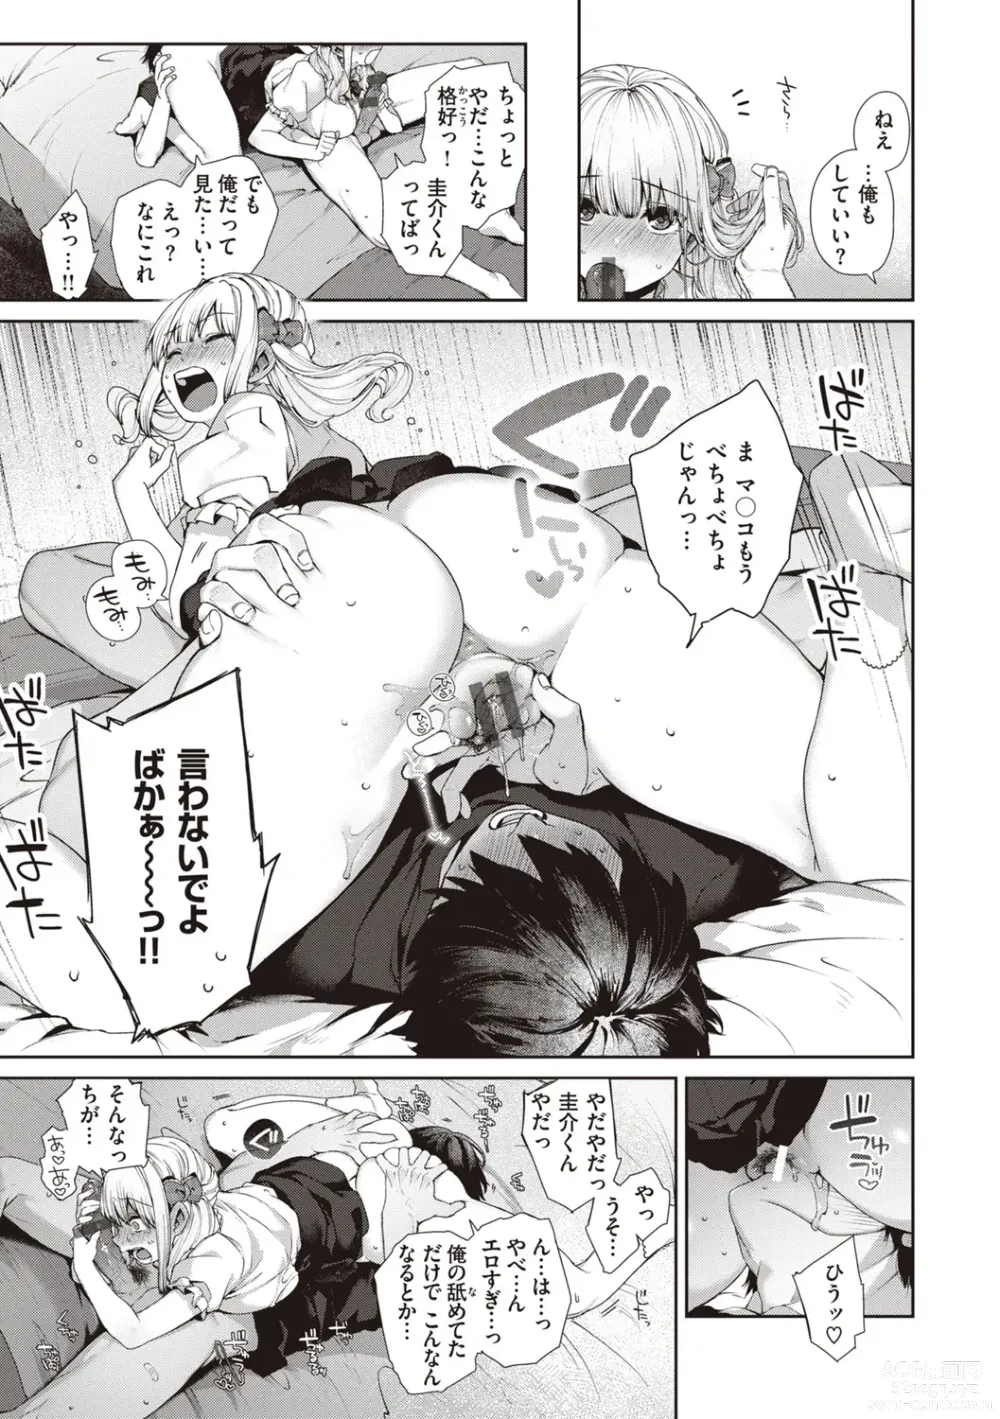 Page 39 of manga DA-DA-MO-RE